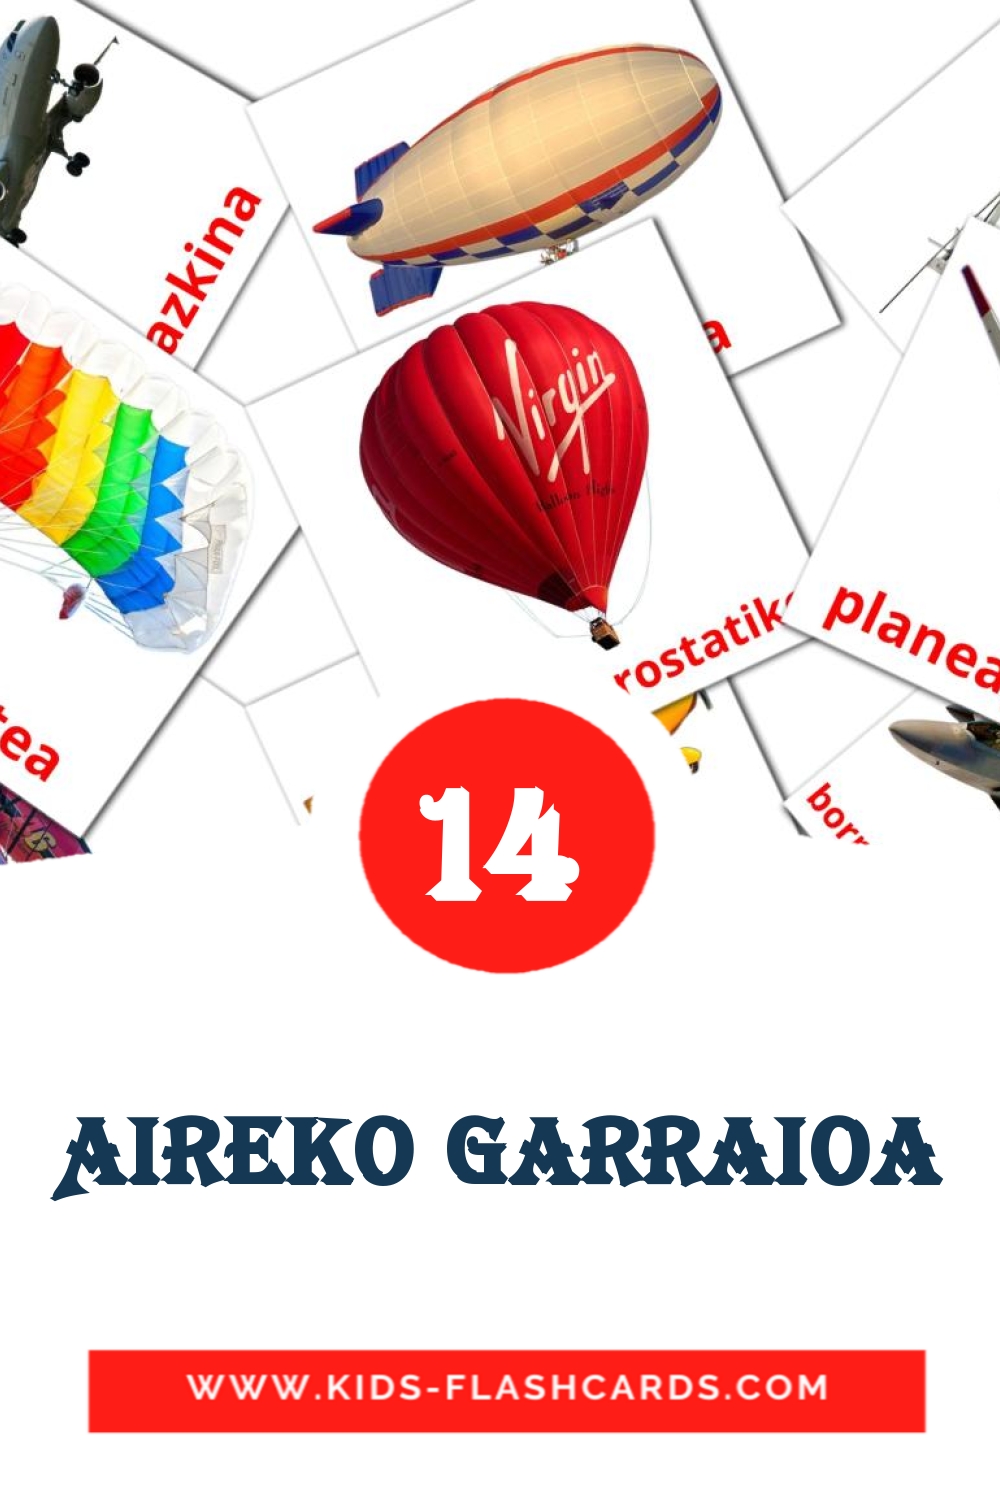 14 carte illustrate di Aireko garraioa per la scuola materna in basco